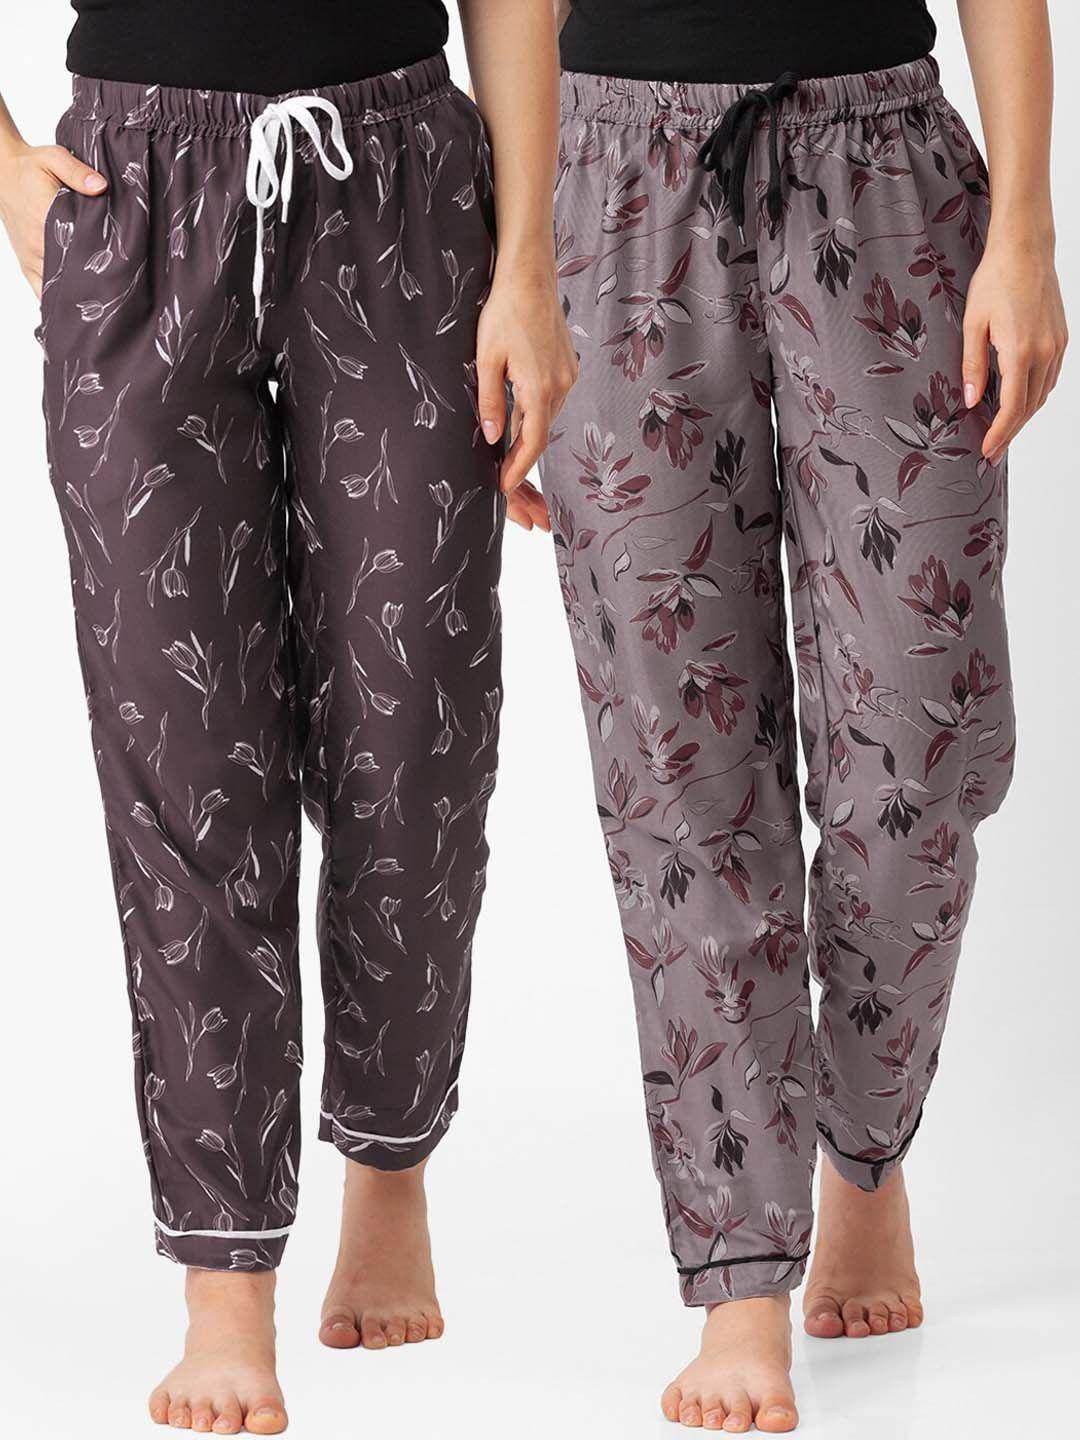 fashionrack women pack of 2 brown & grey printed cotton lounge pants